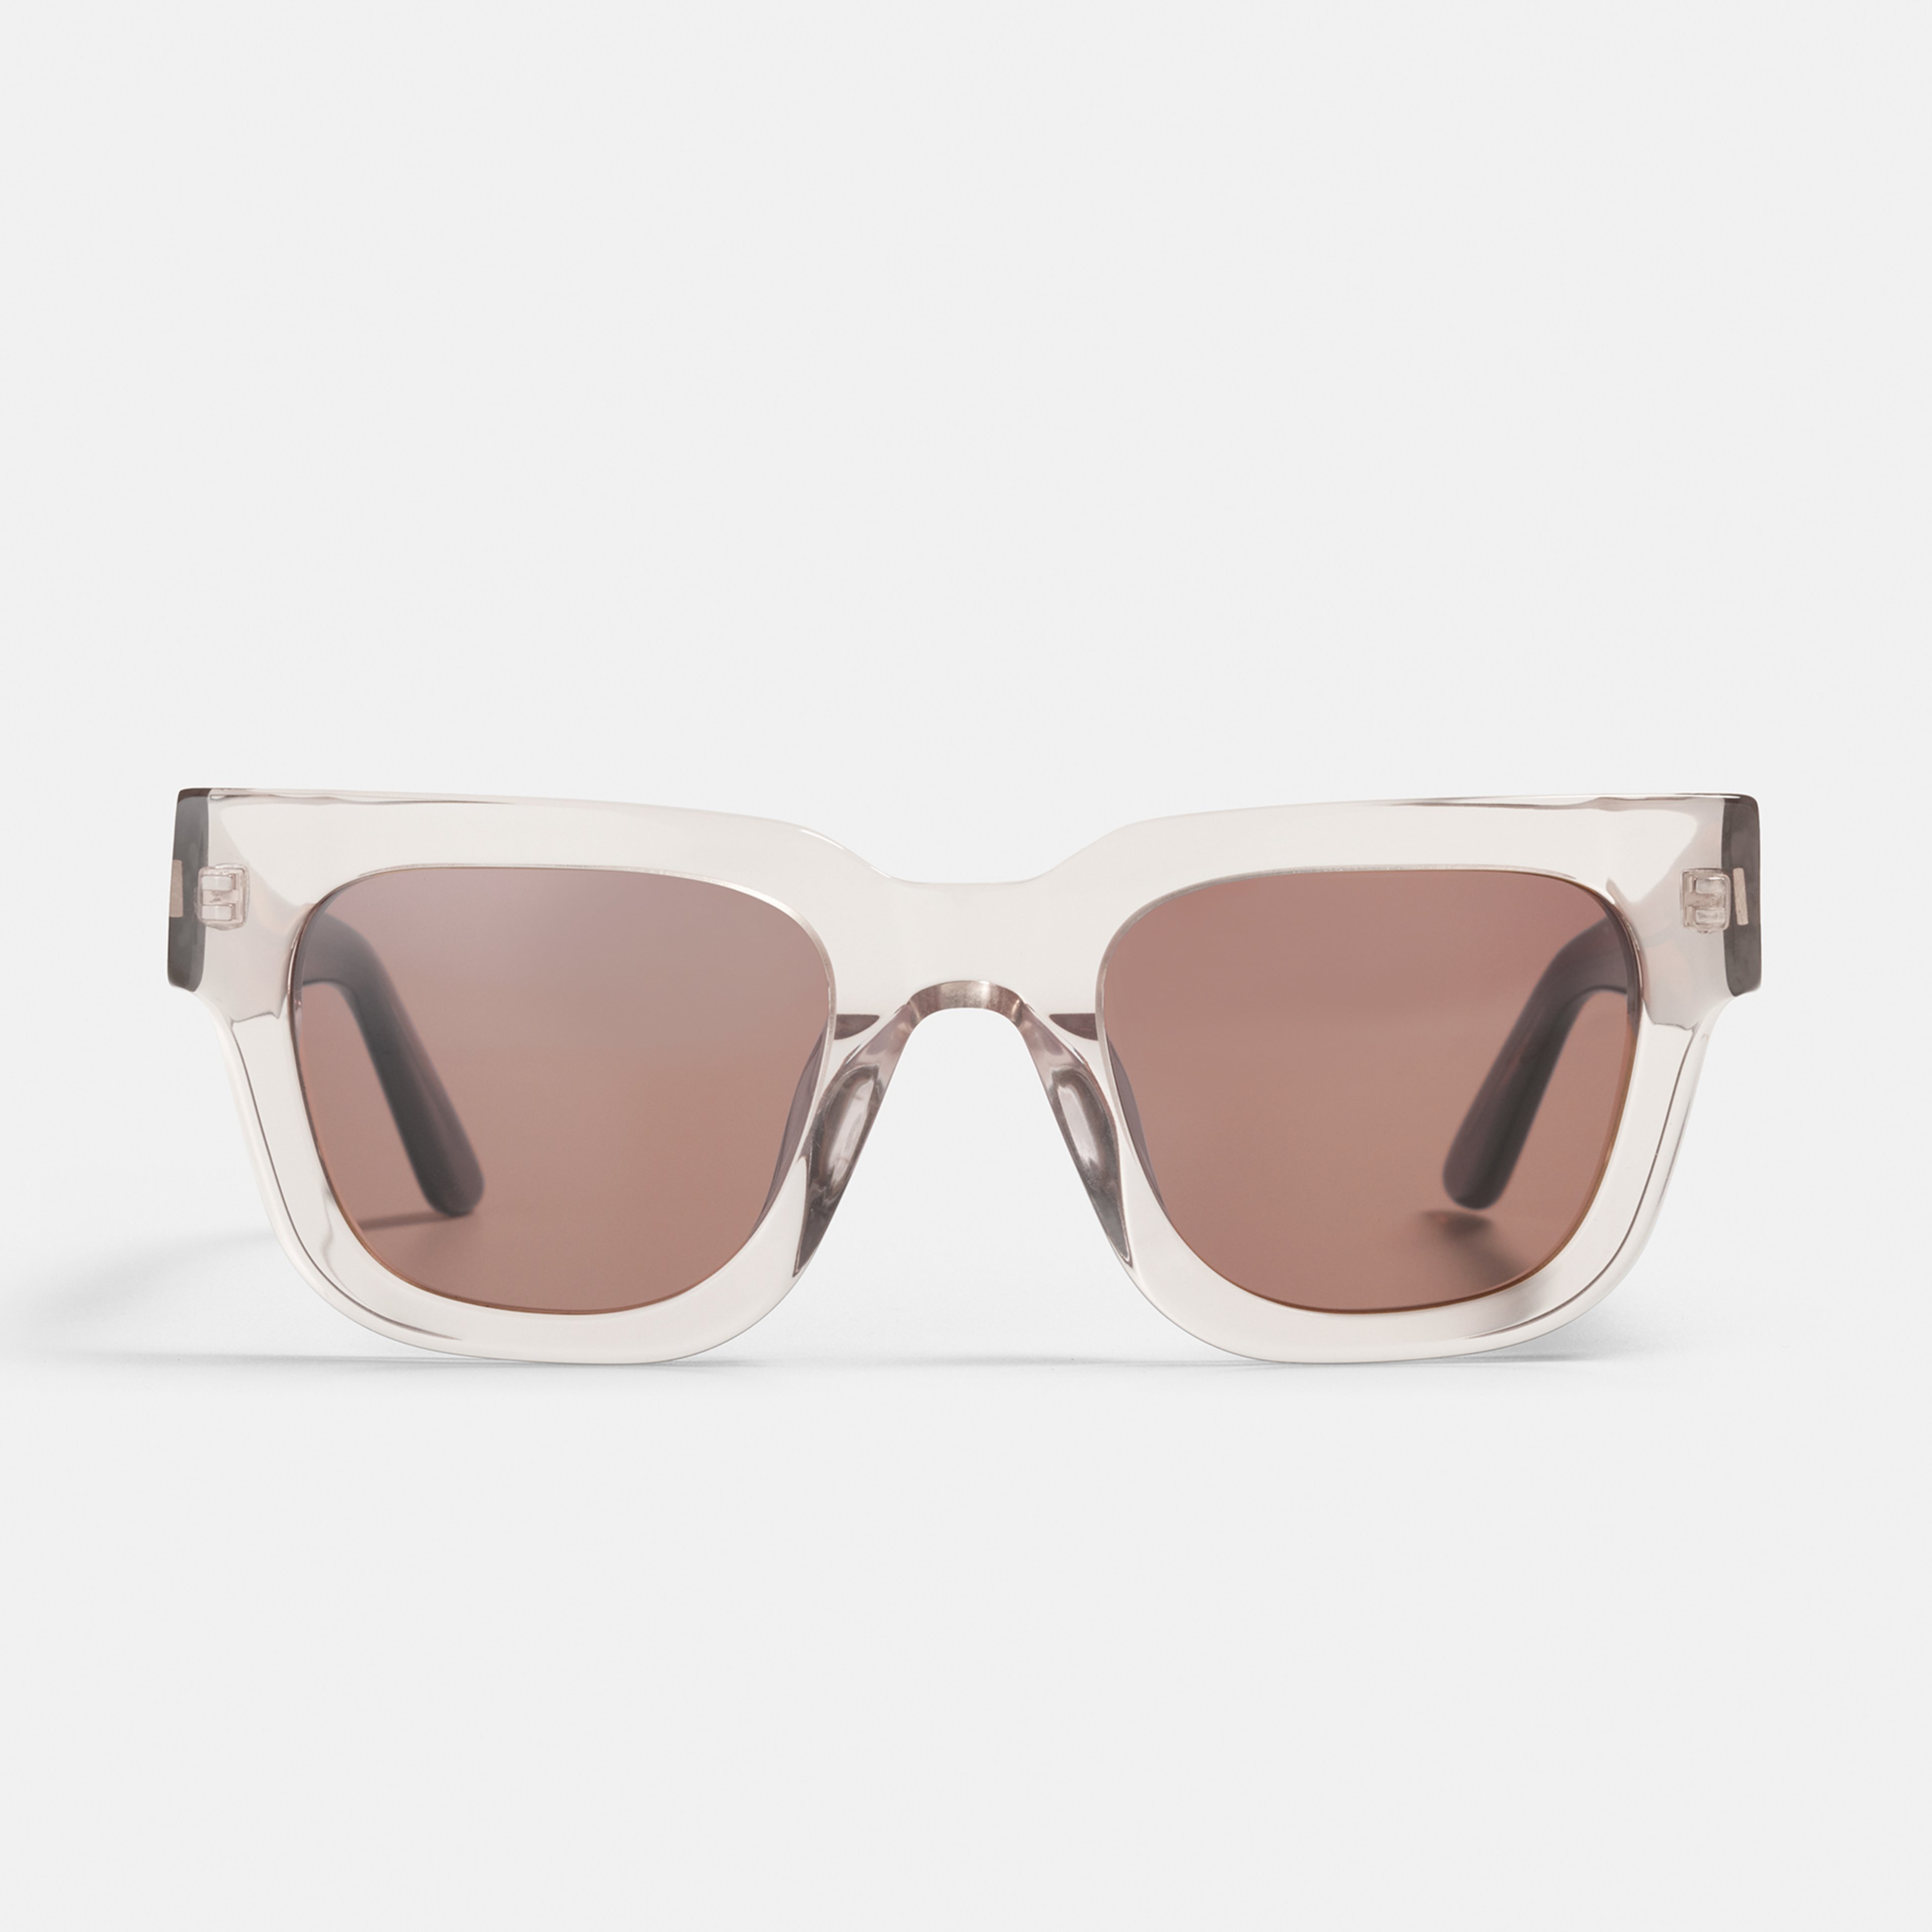 Ace & Tate Sunglasses | Square Bio acetate in Brown, Clear, tortoise